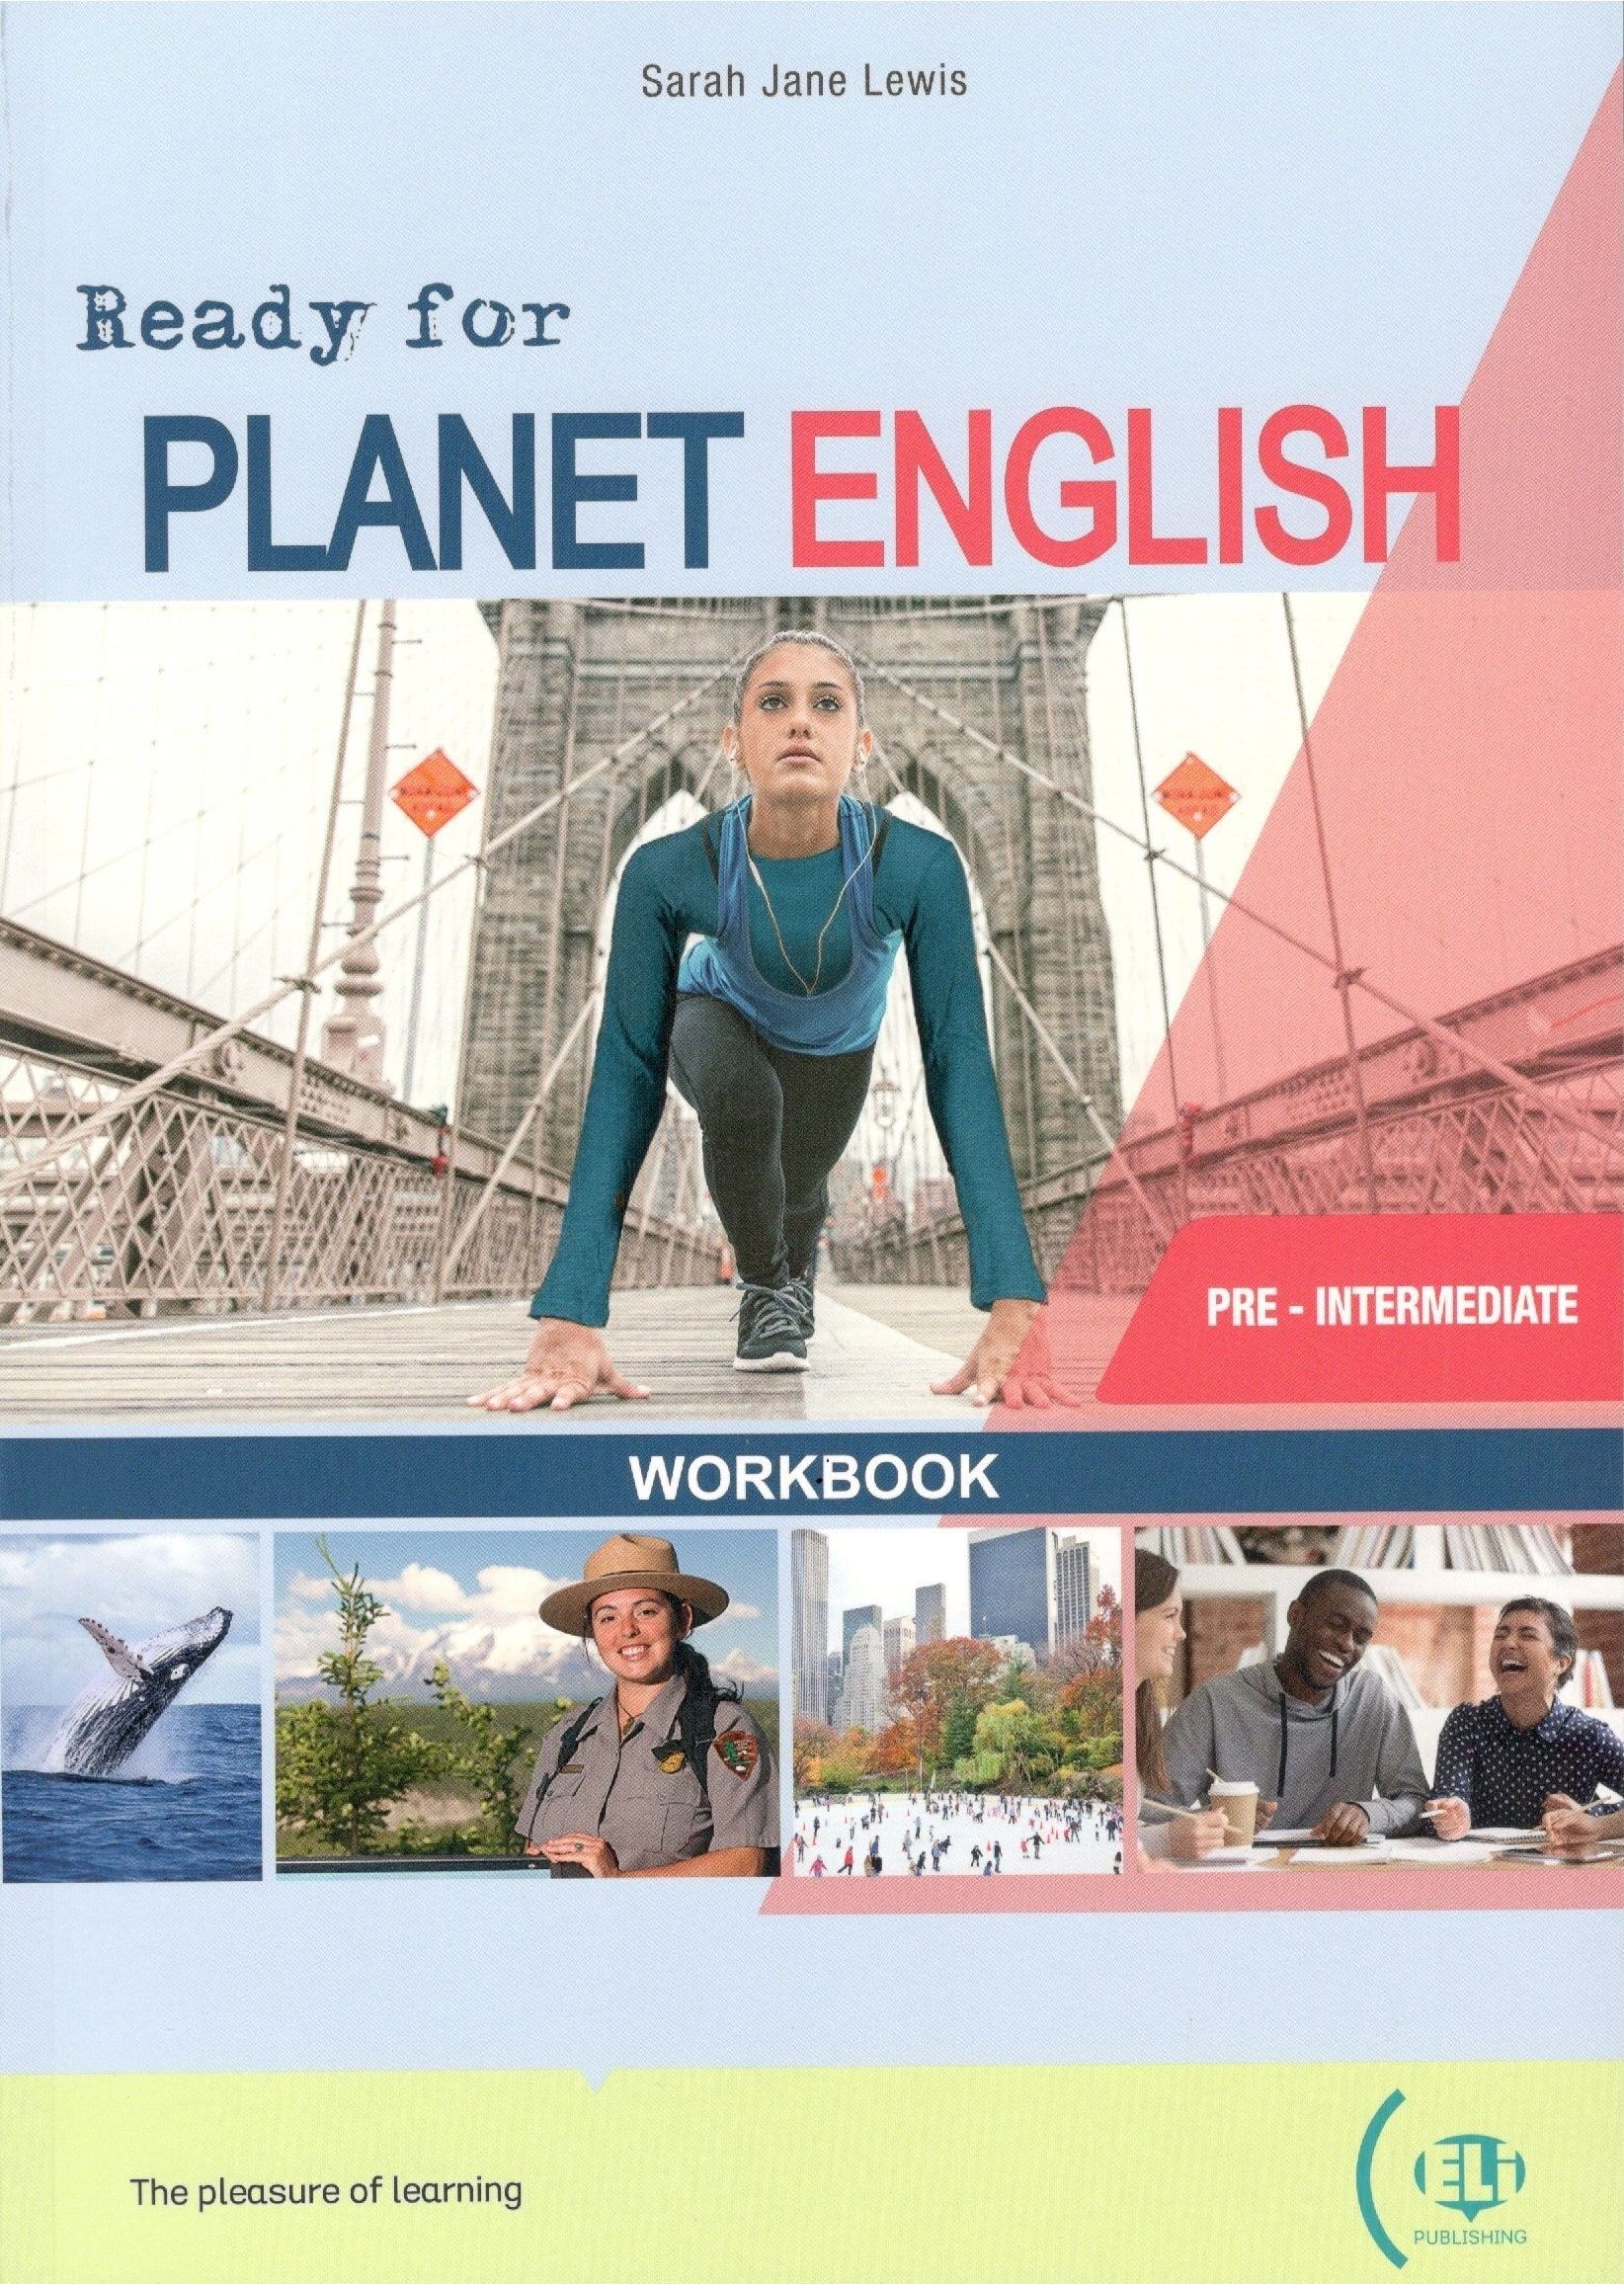 Английский язык ready. Planet of English. Planet of English учебник английского. Planet of English book. Planet of English учебник Лаврик.